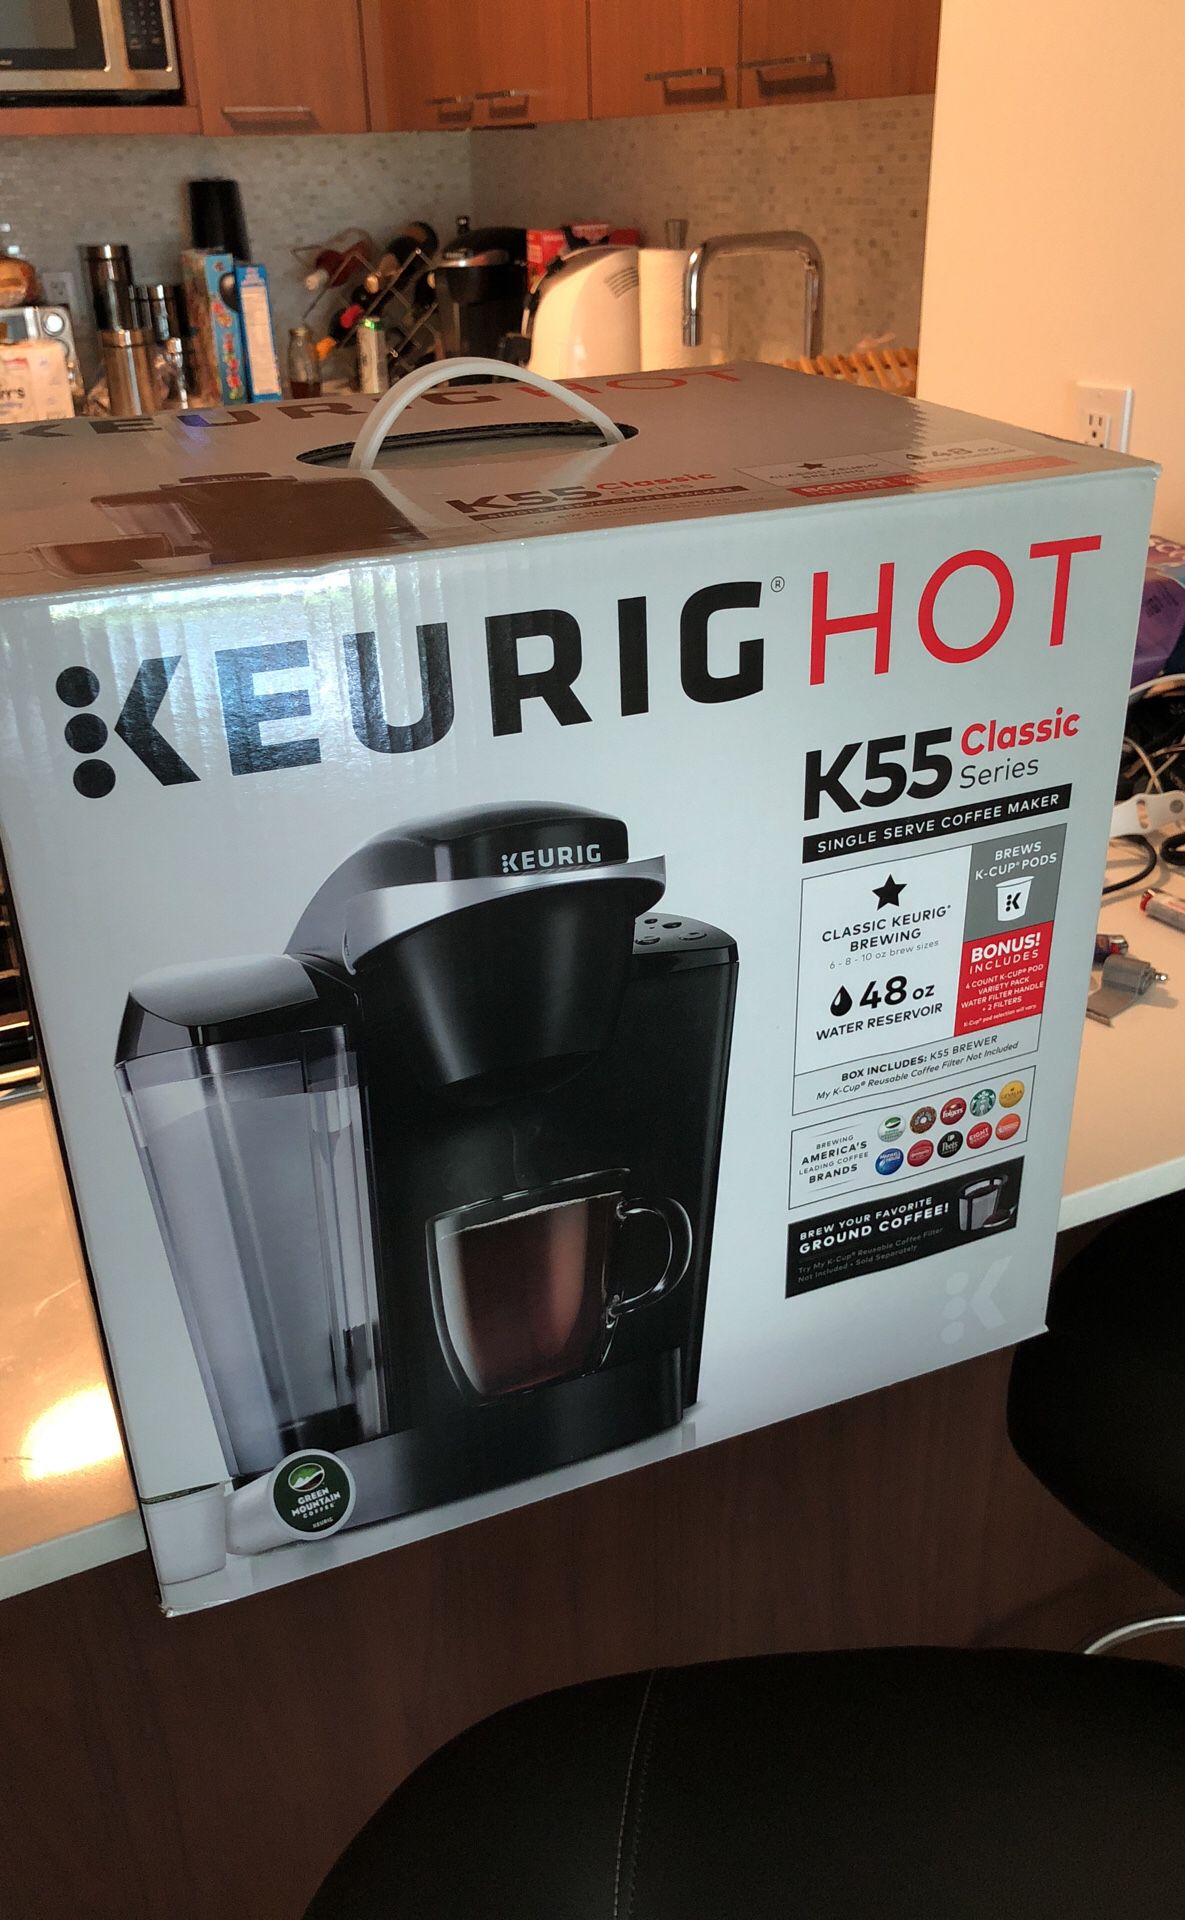 Keurig Hot K55 Classic Series Single Serve Coffee Maker